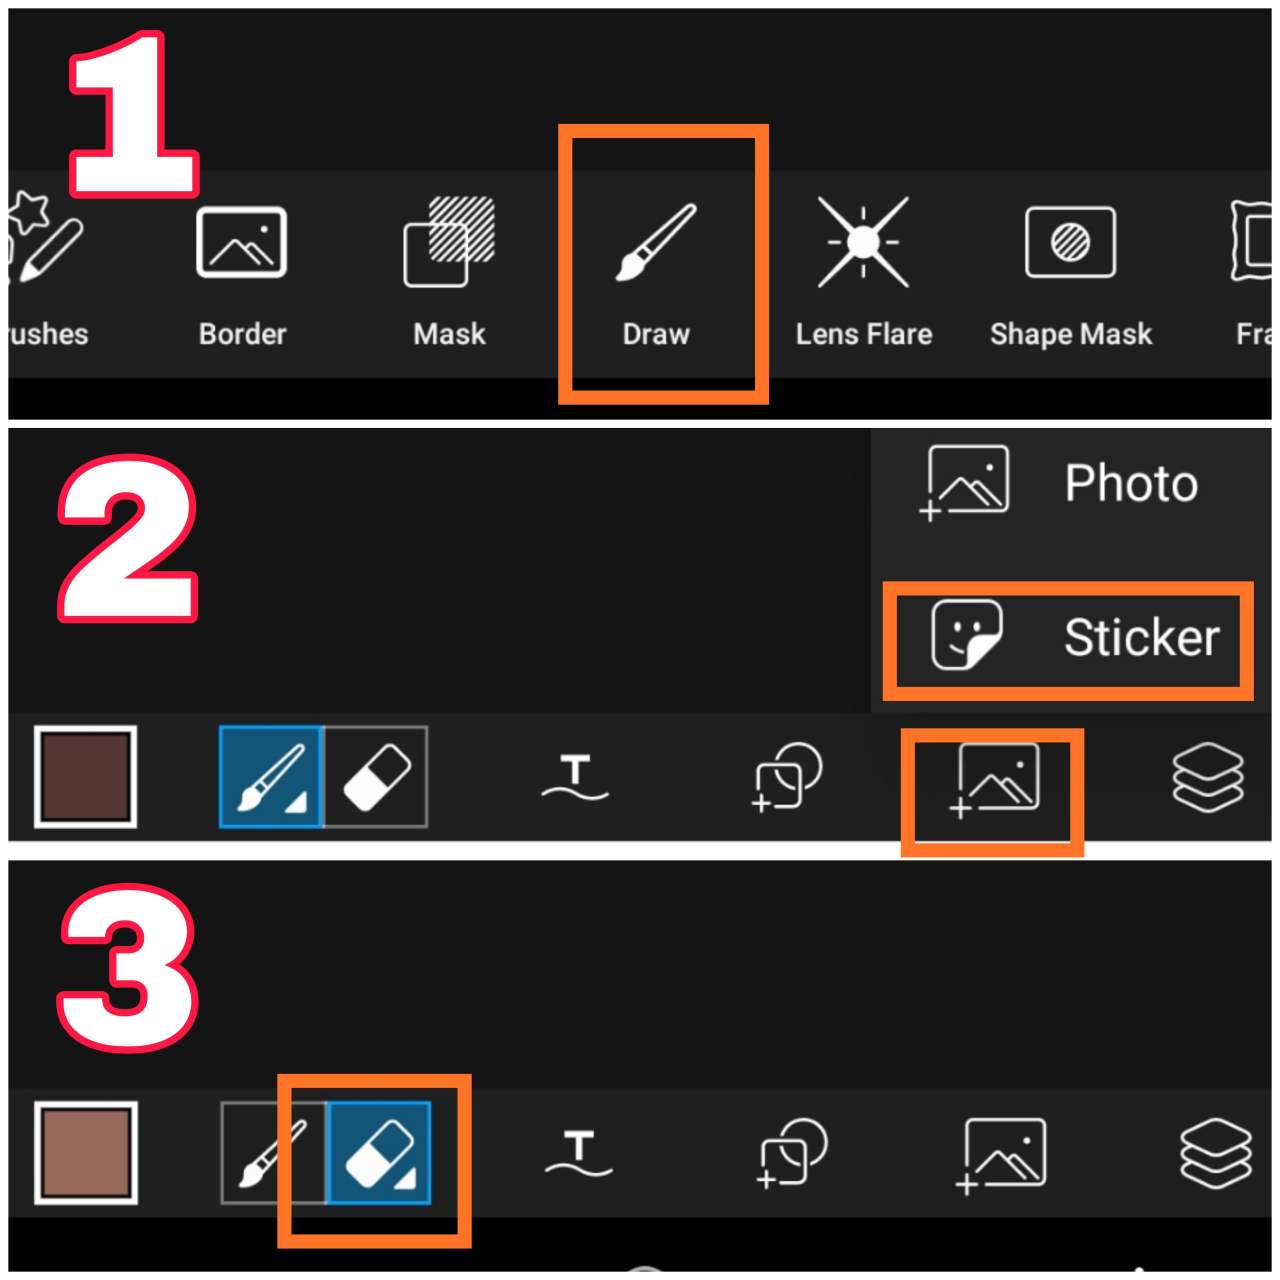 PicsArt Selection Tool - PicsArt में Selection Tool का उपयोग कैसे करें